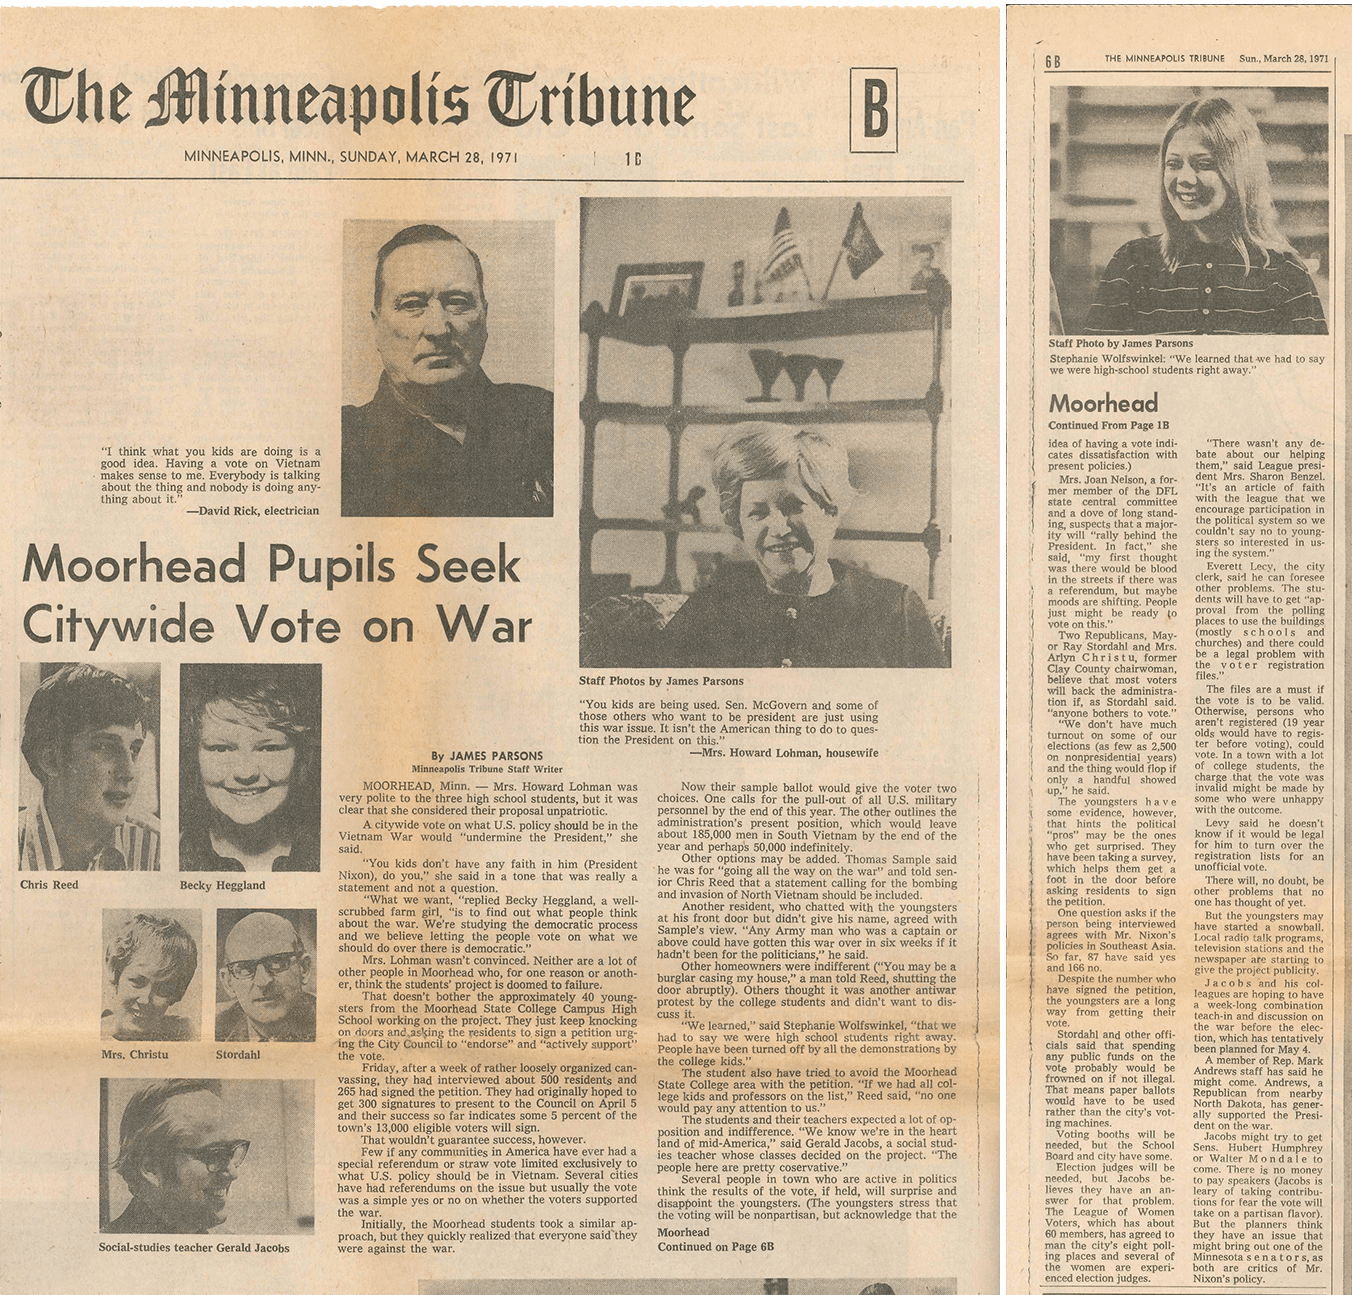 Front page story on Minneapolis Tribune, March 28, 1971. Headline reads "Moorhead pupils Seek Citywide Vote on War."